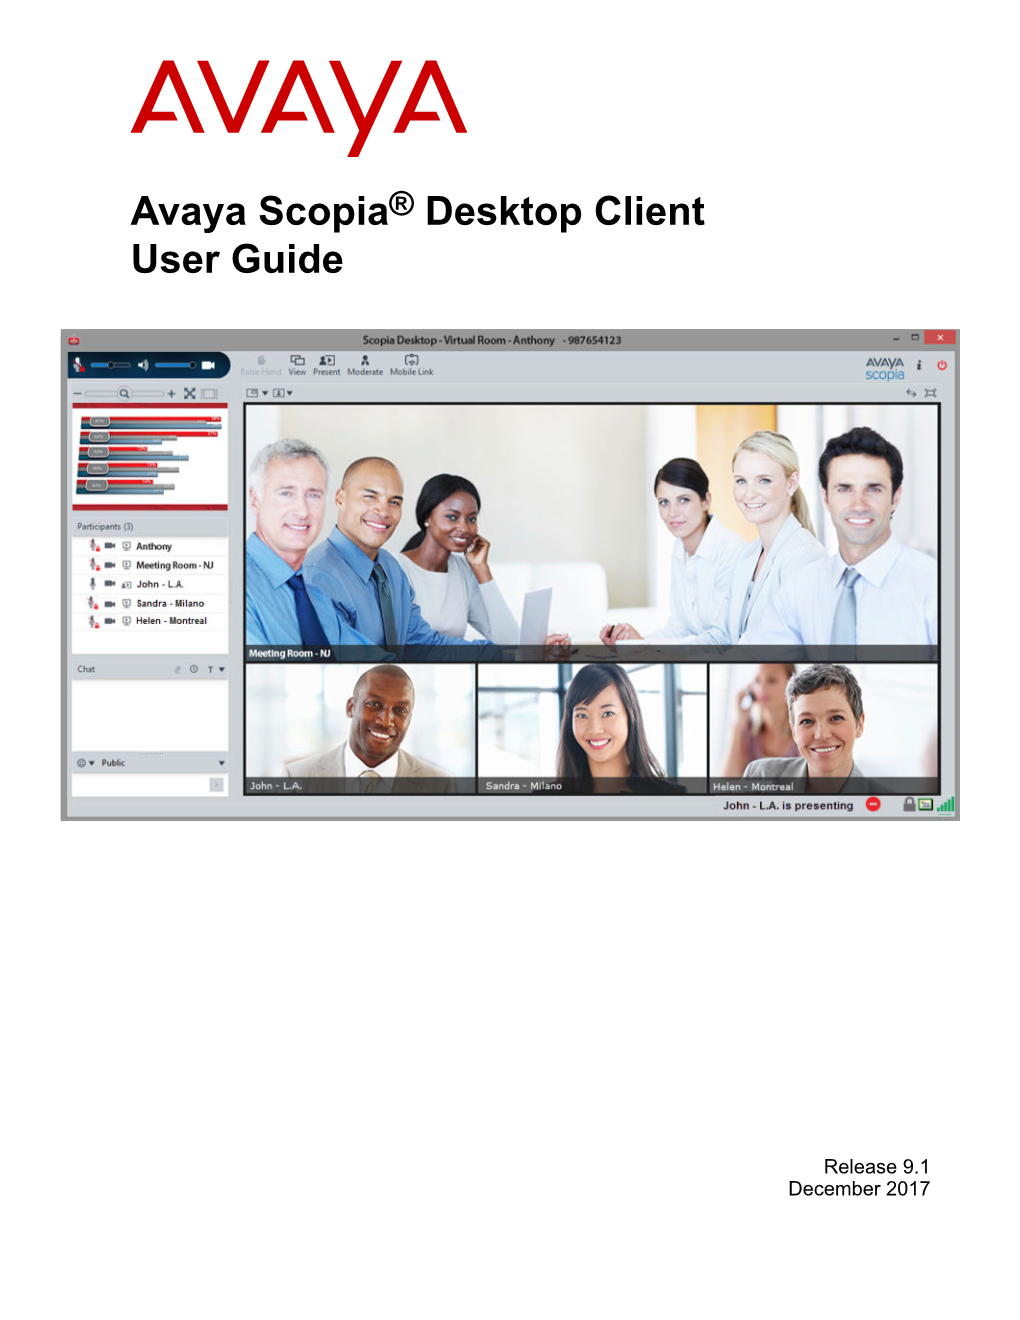 User Guide for Avaya Scopia® Desktop Client